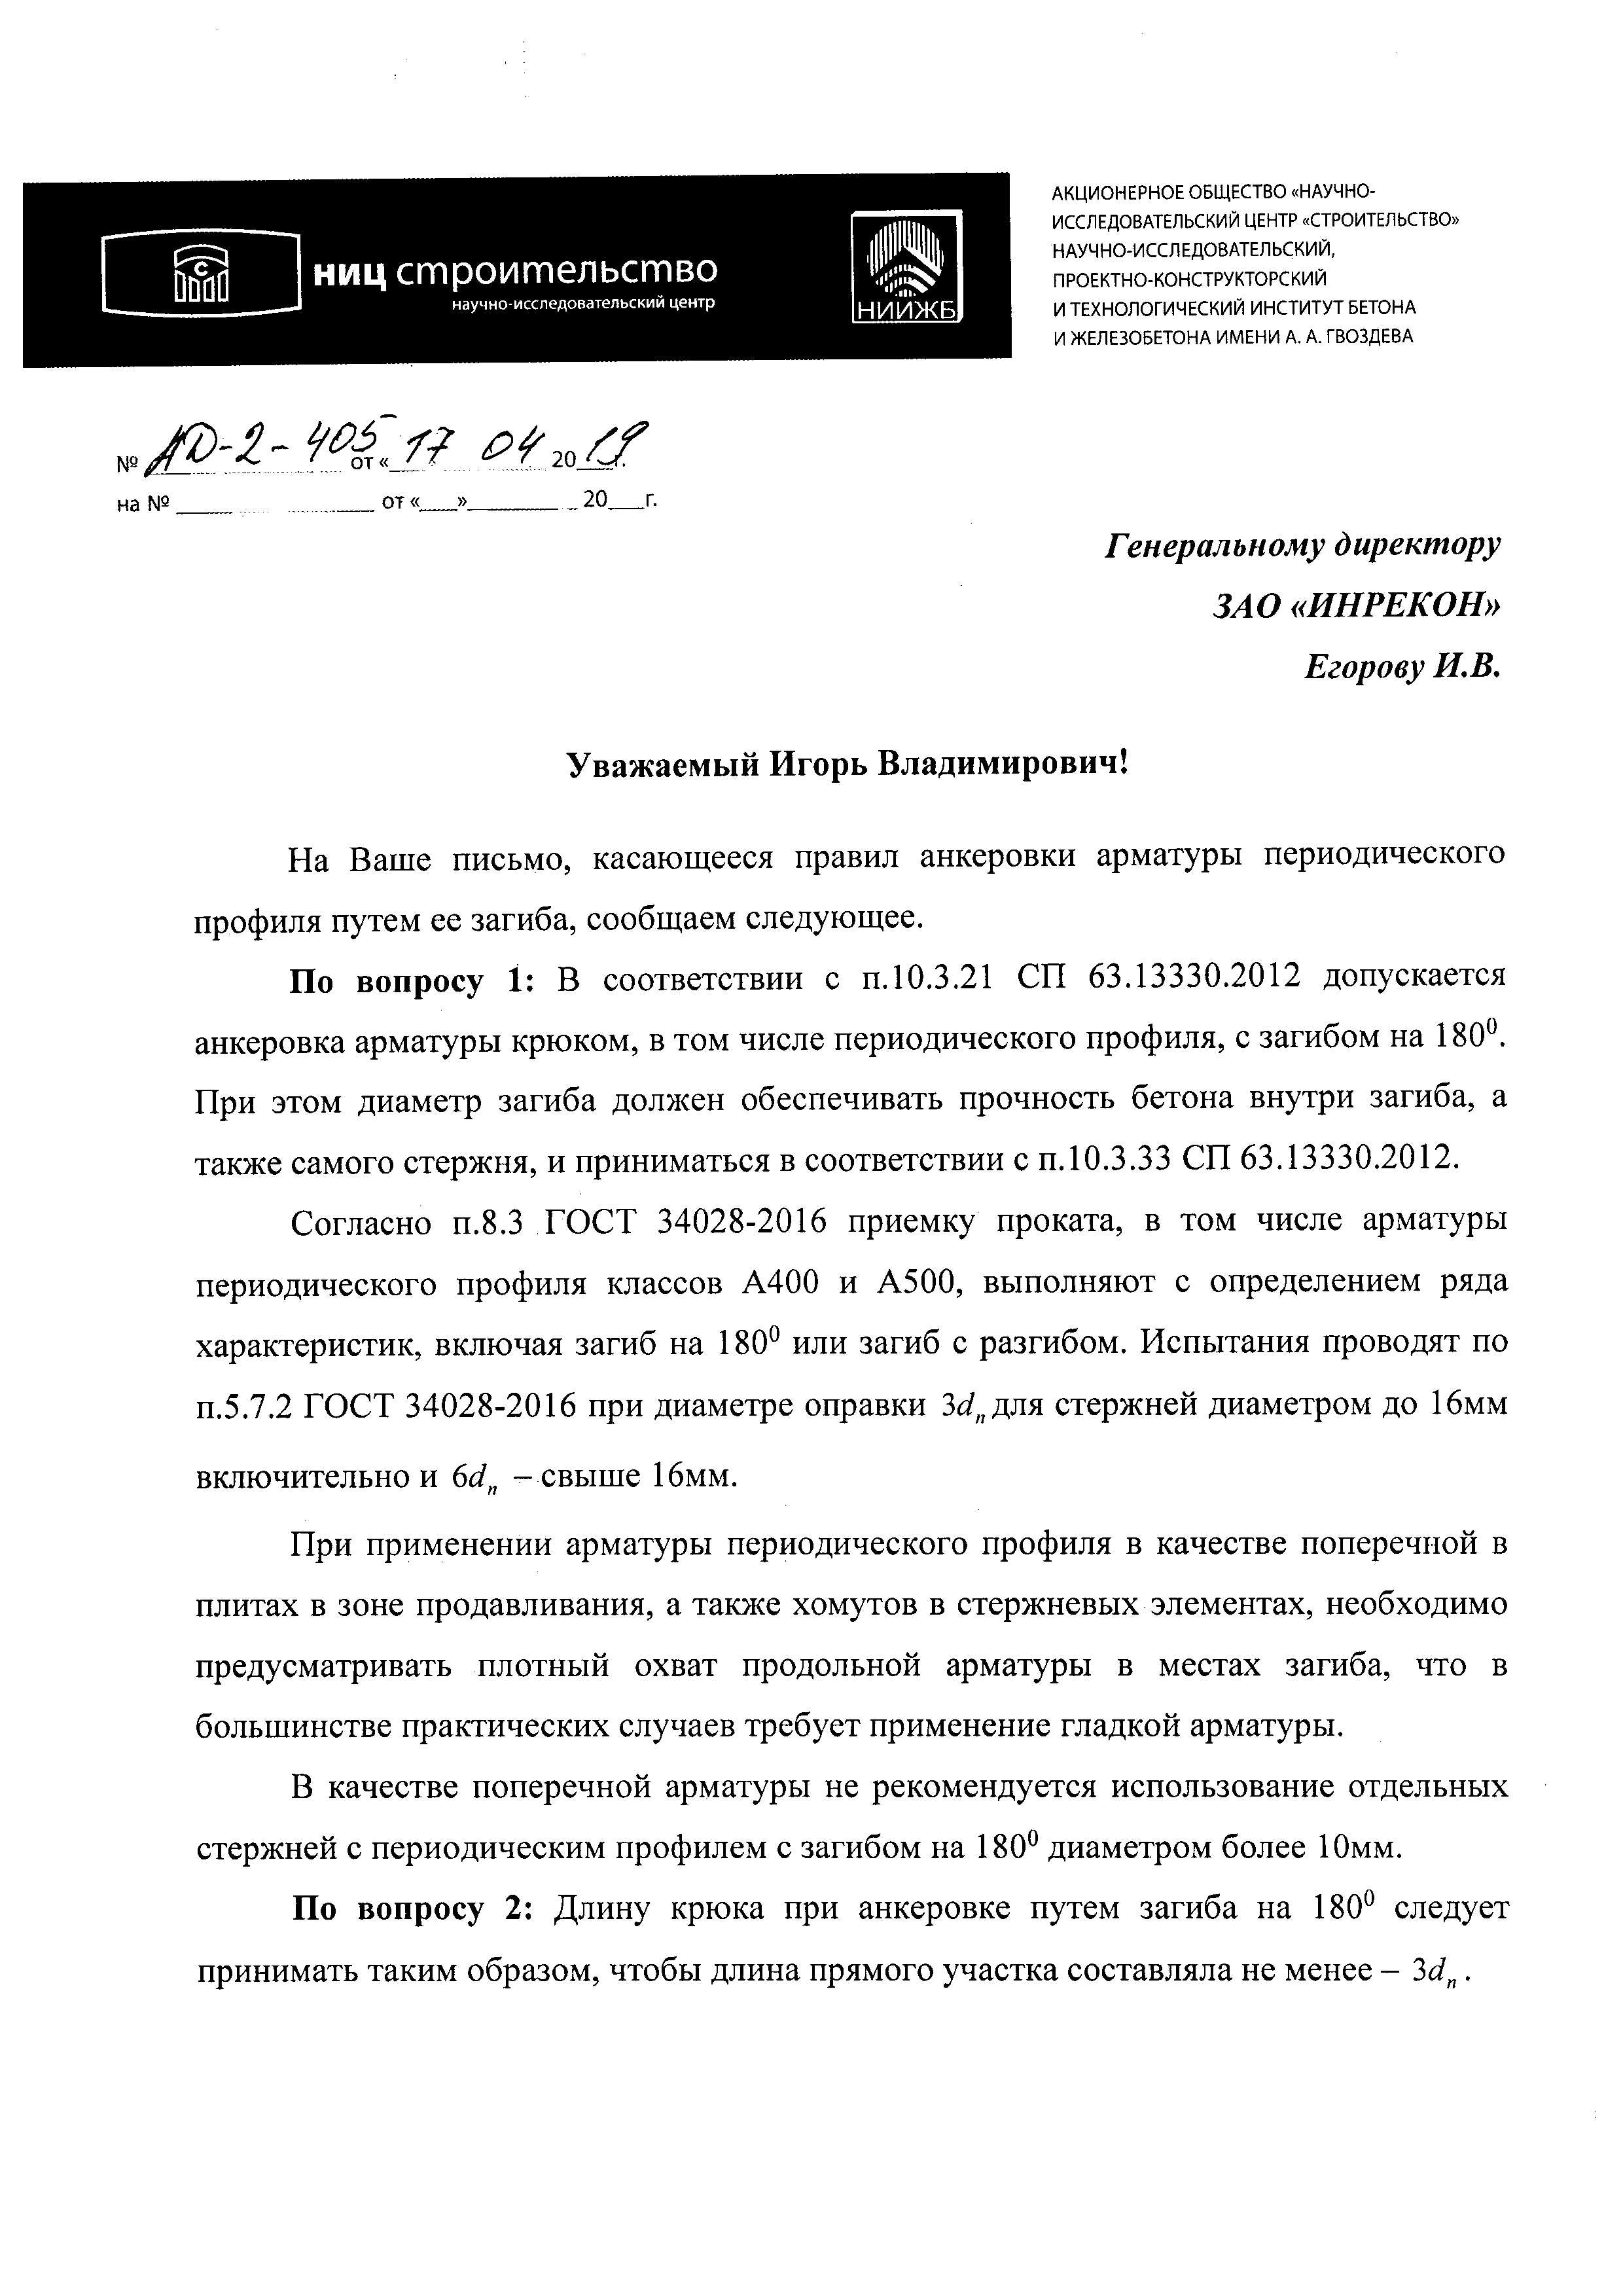 Письмо АД-2-405